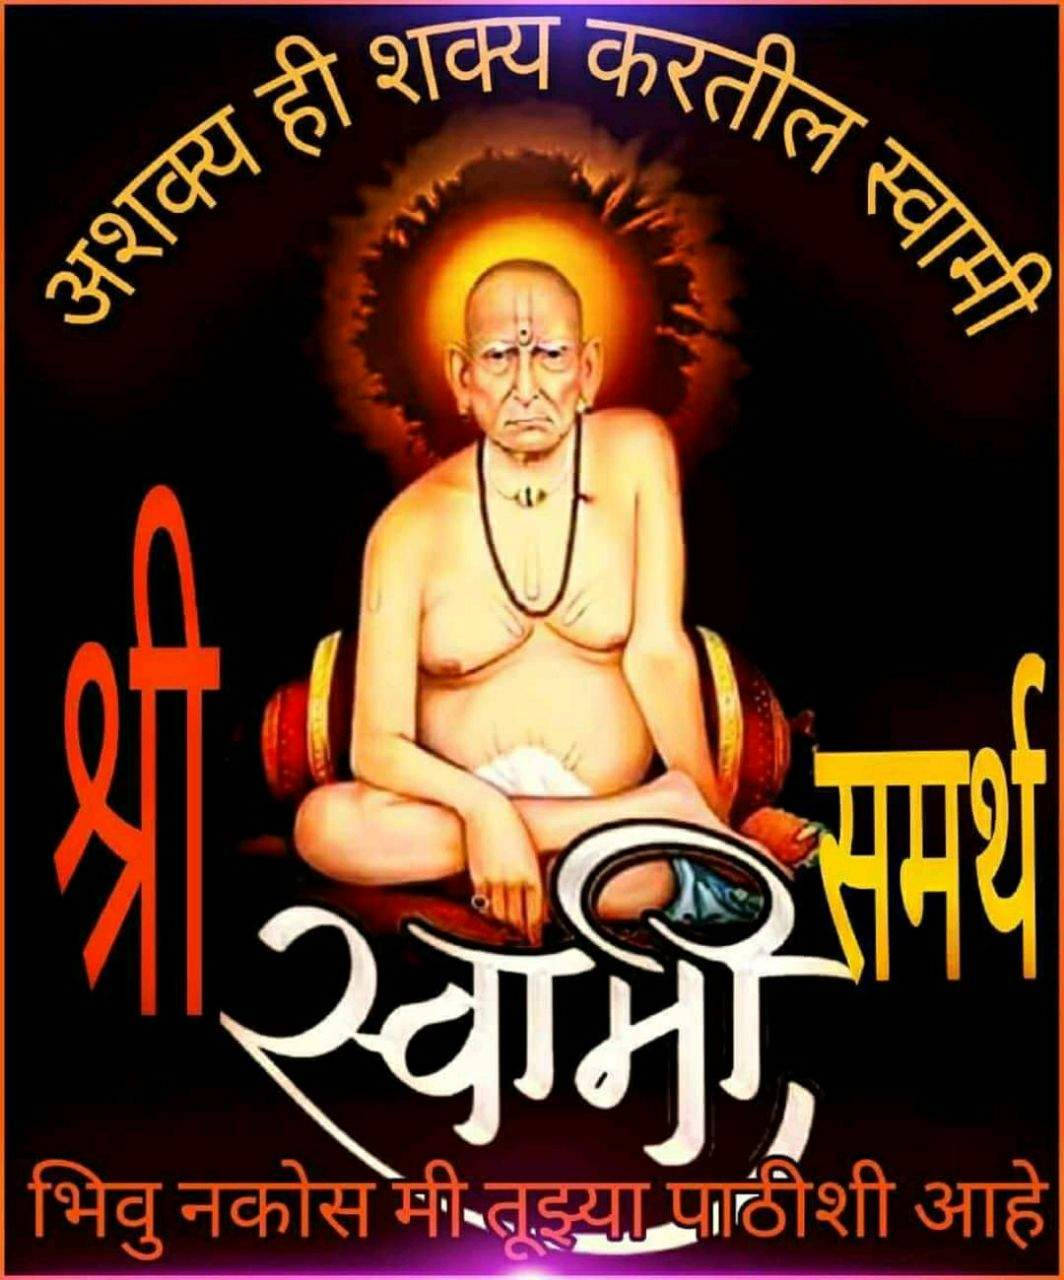 Download Shri Swami Samarth With Hindi Text Wallpaper | Wallpapers.com